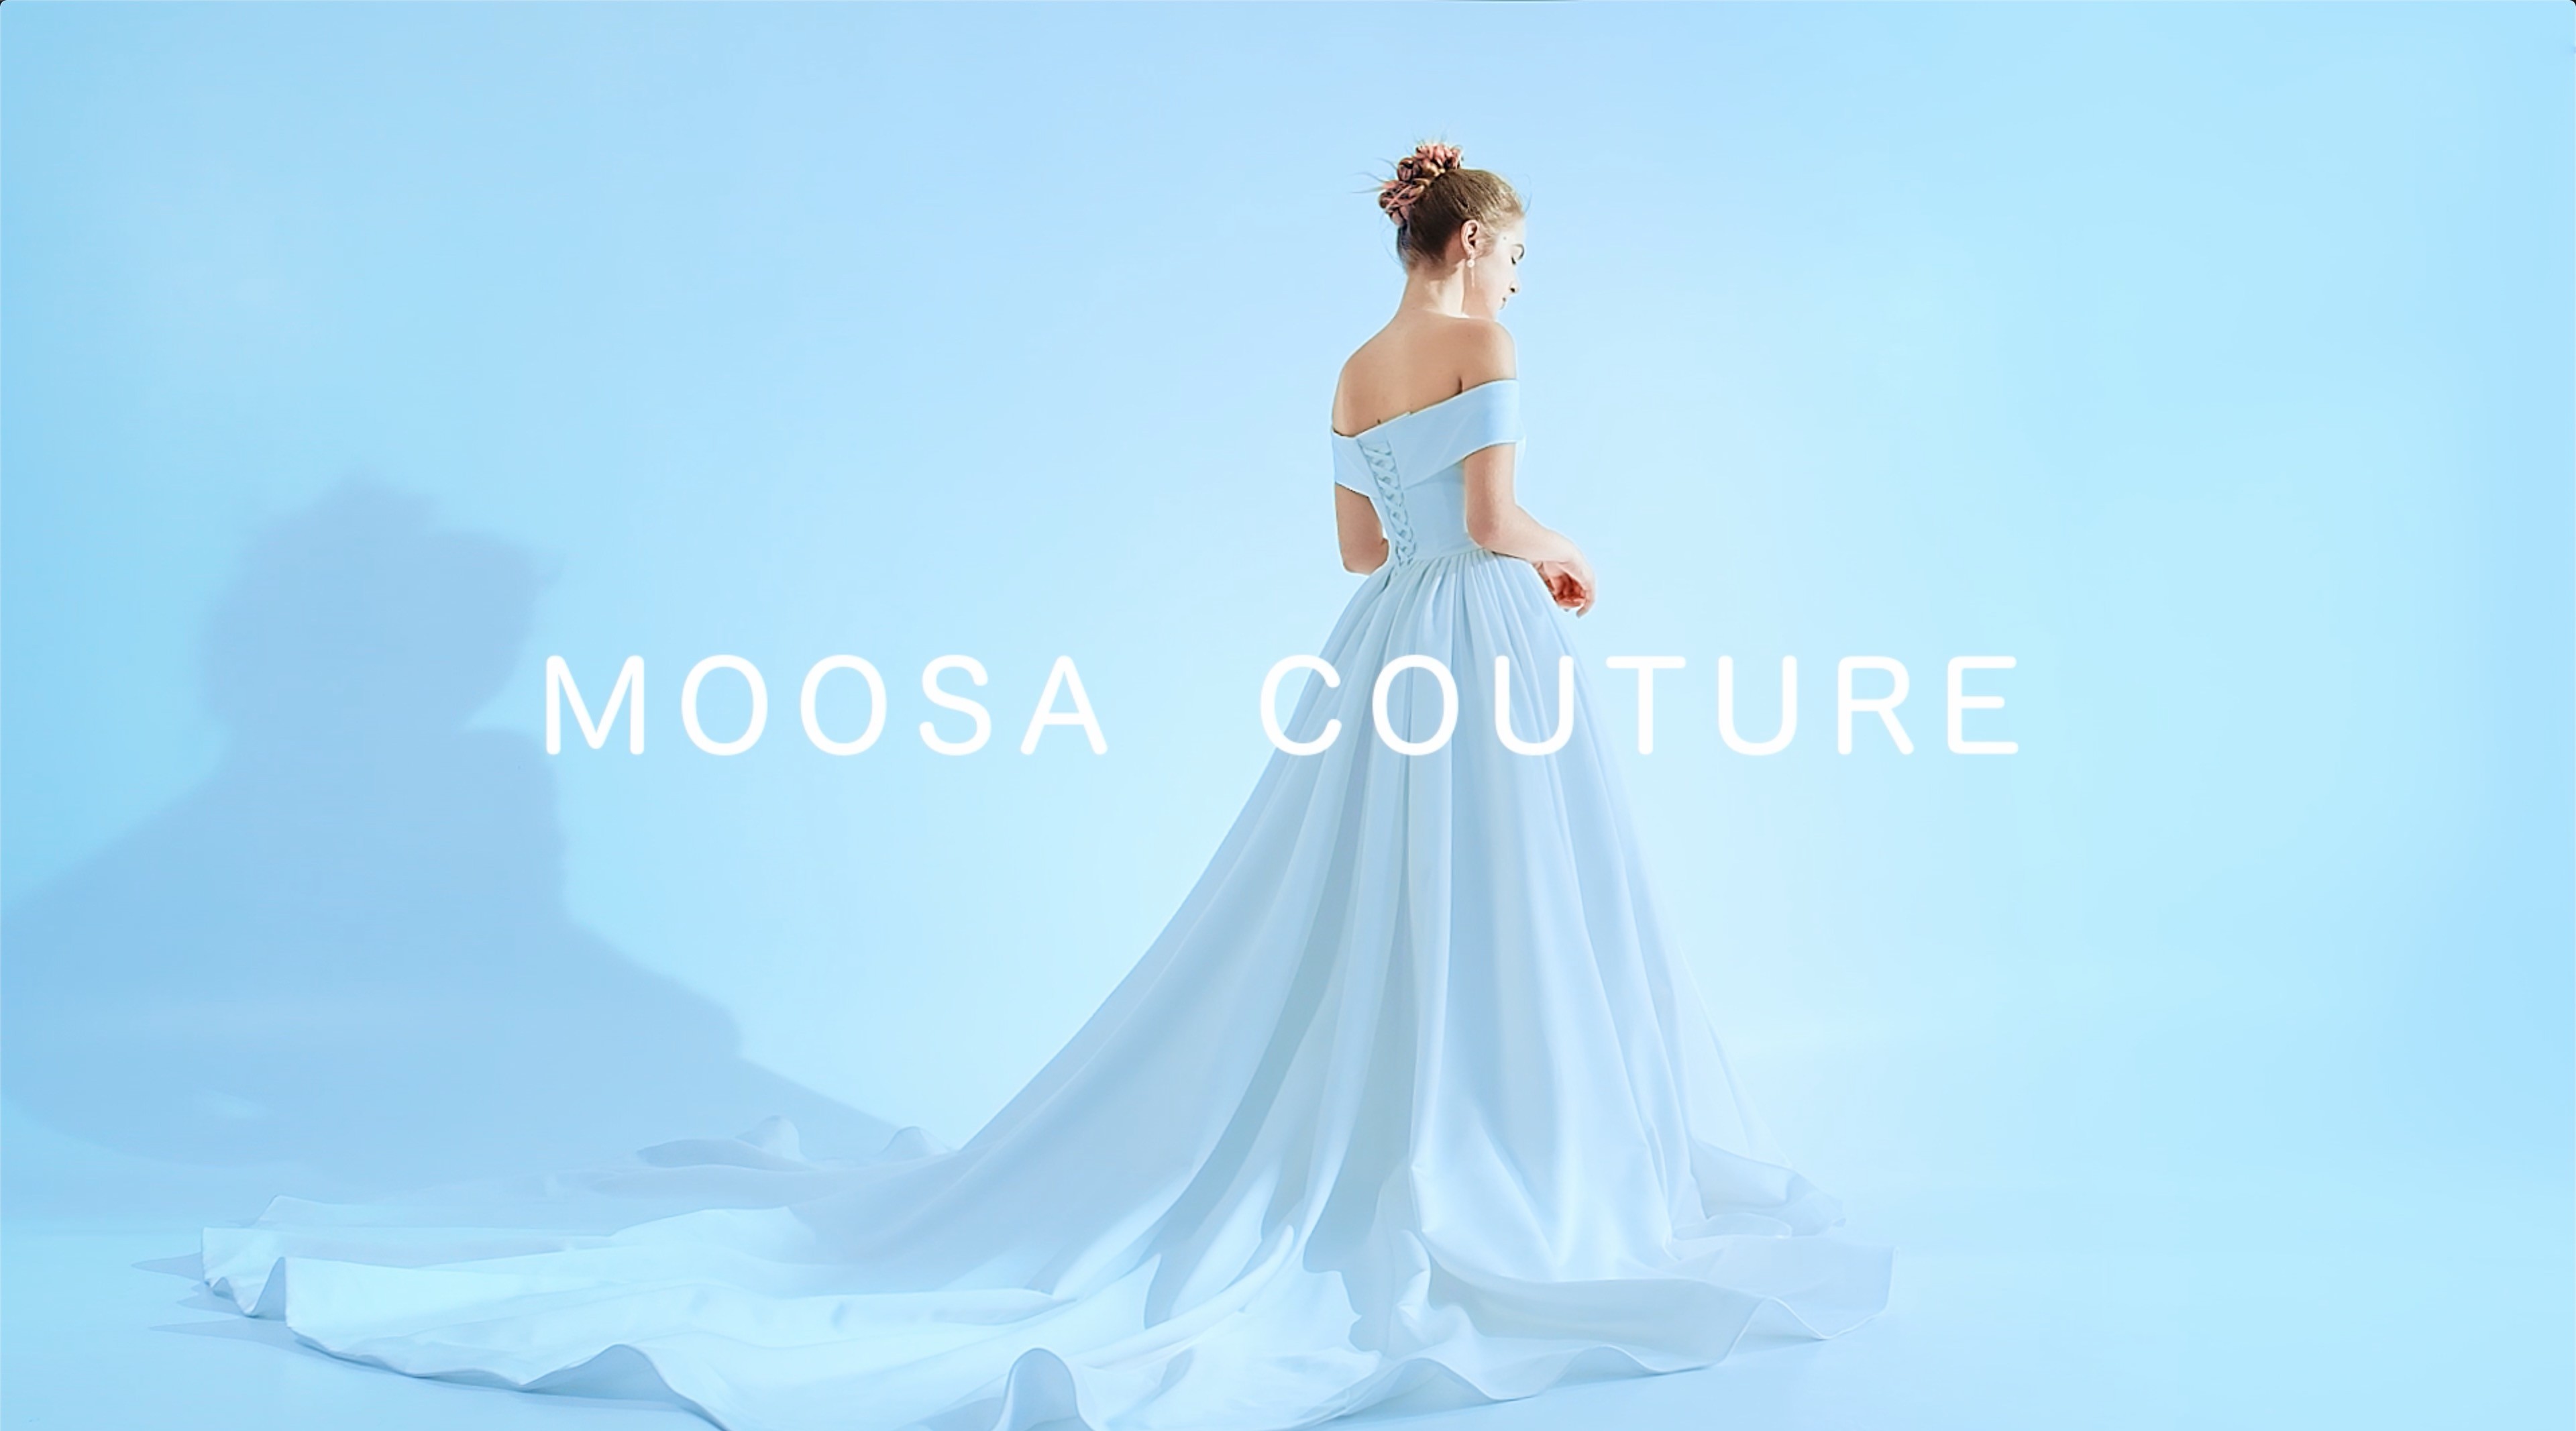 Moosa  Couture 婚纱广告 | 石书瑞作品 